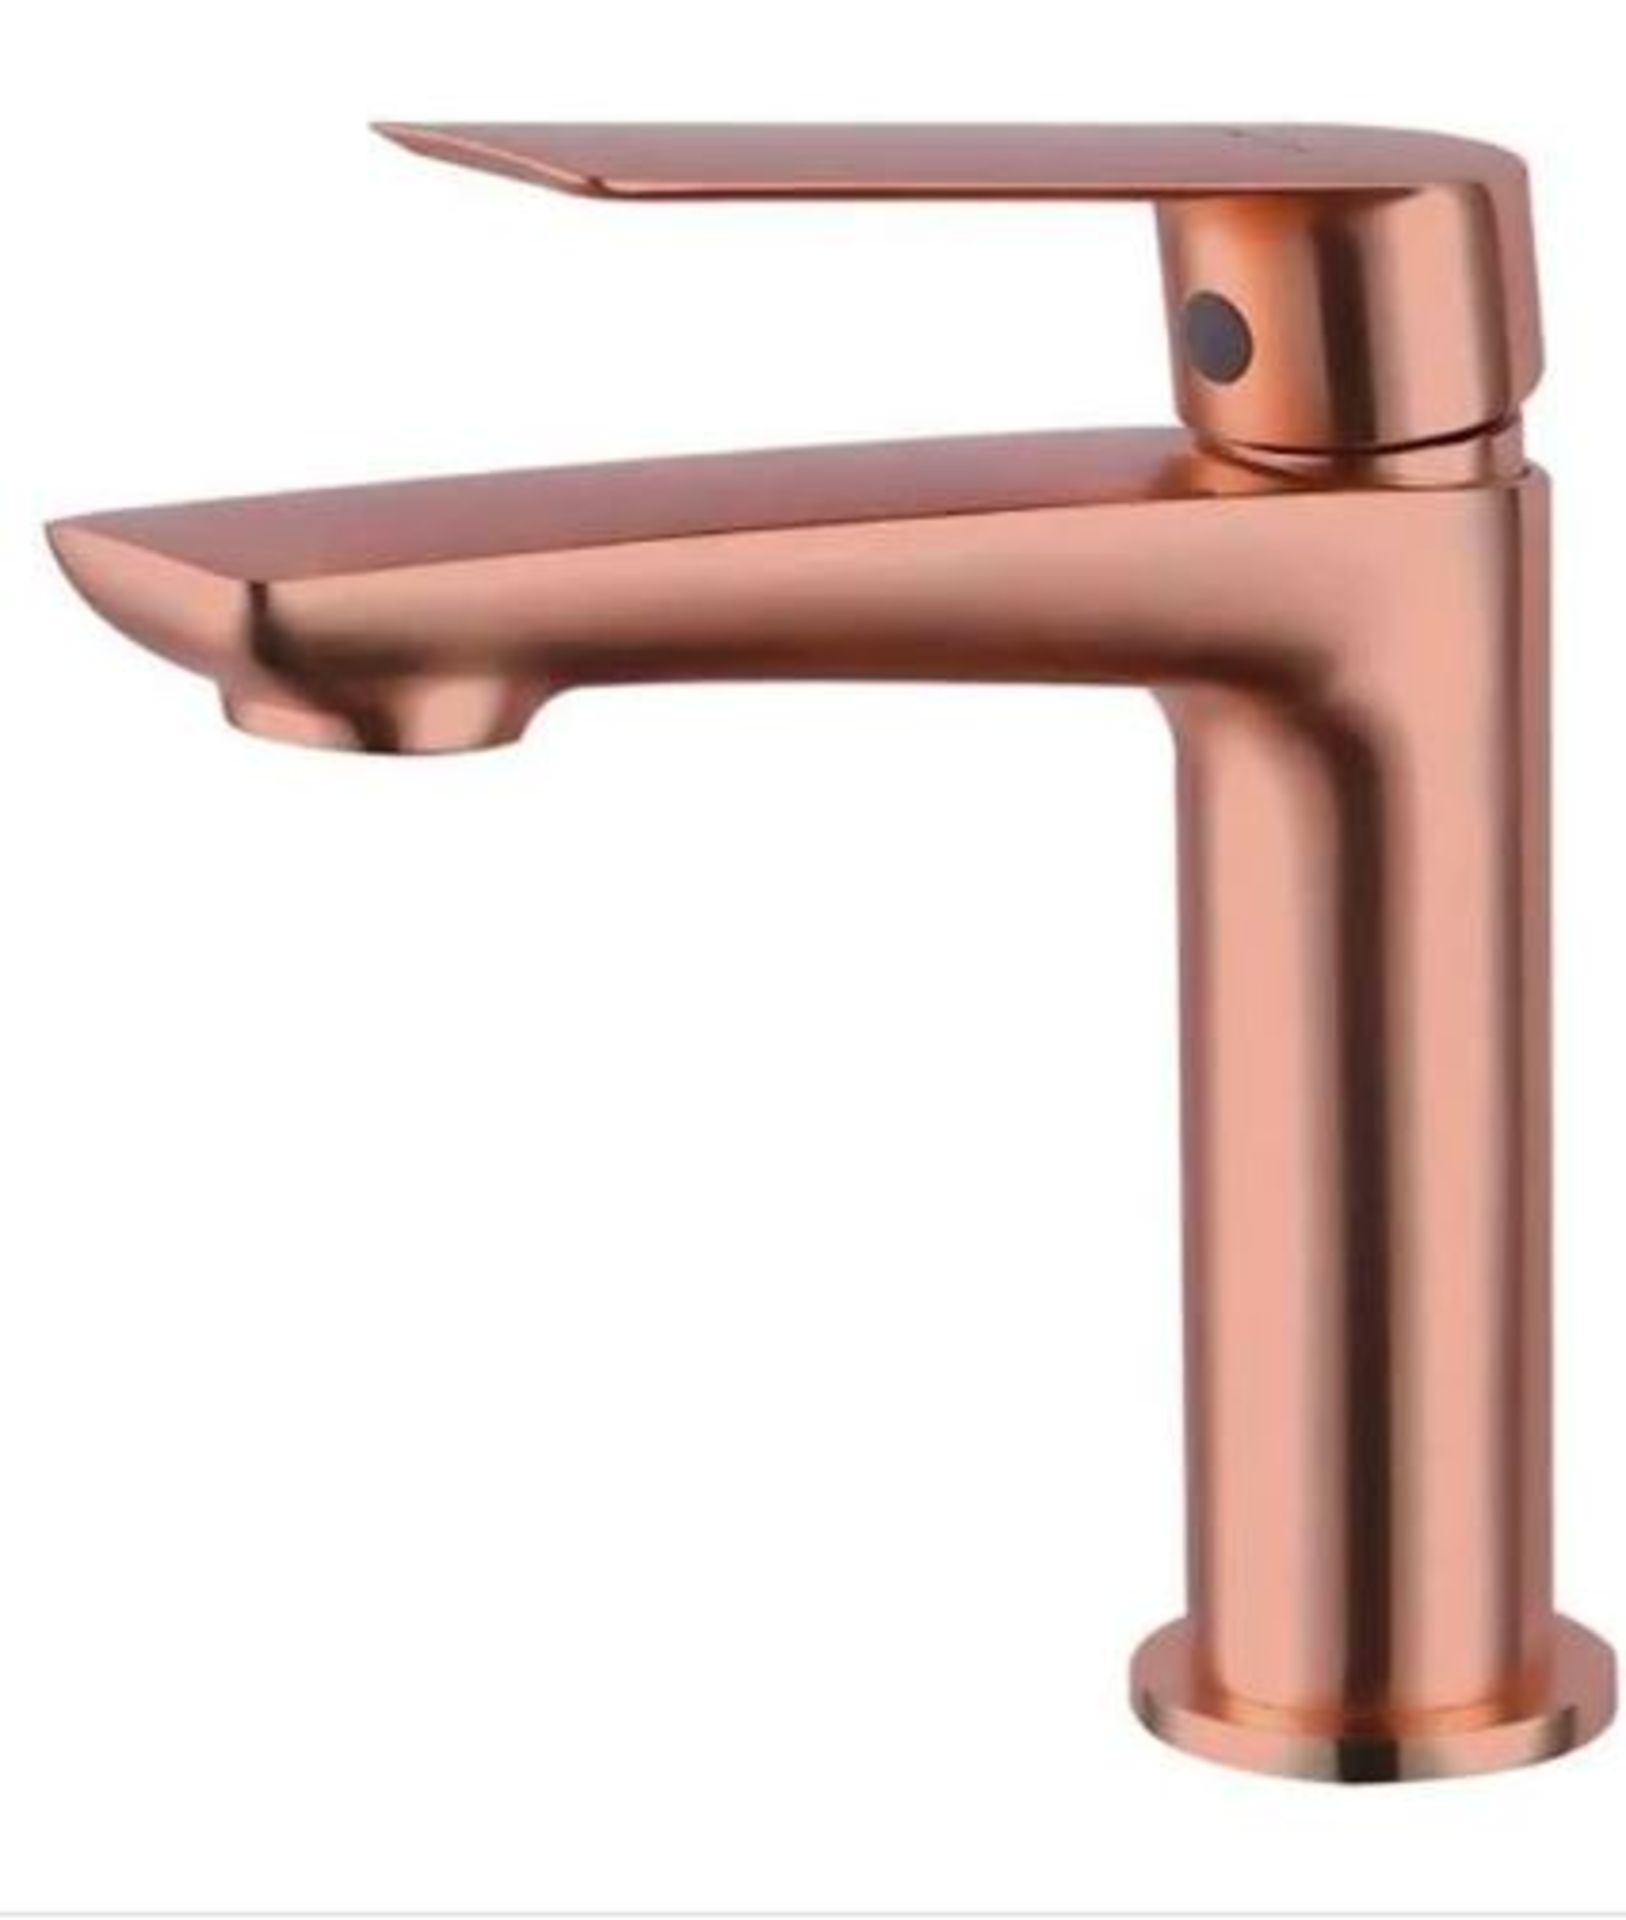 RRP £216. DEMM Italian Sleek Basin Mixer Tap - Rose Gold. https://www.google.com/shopping/product/1 - Image 2 of 2